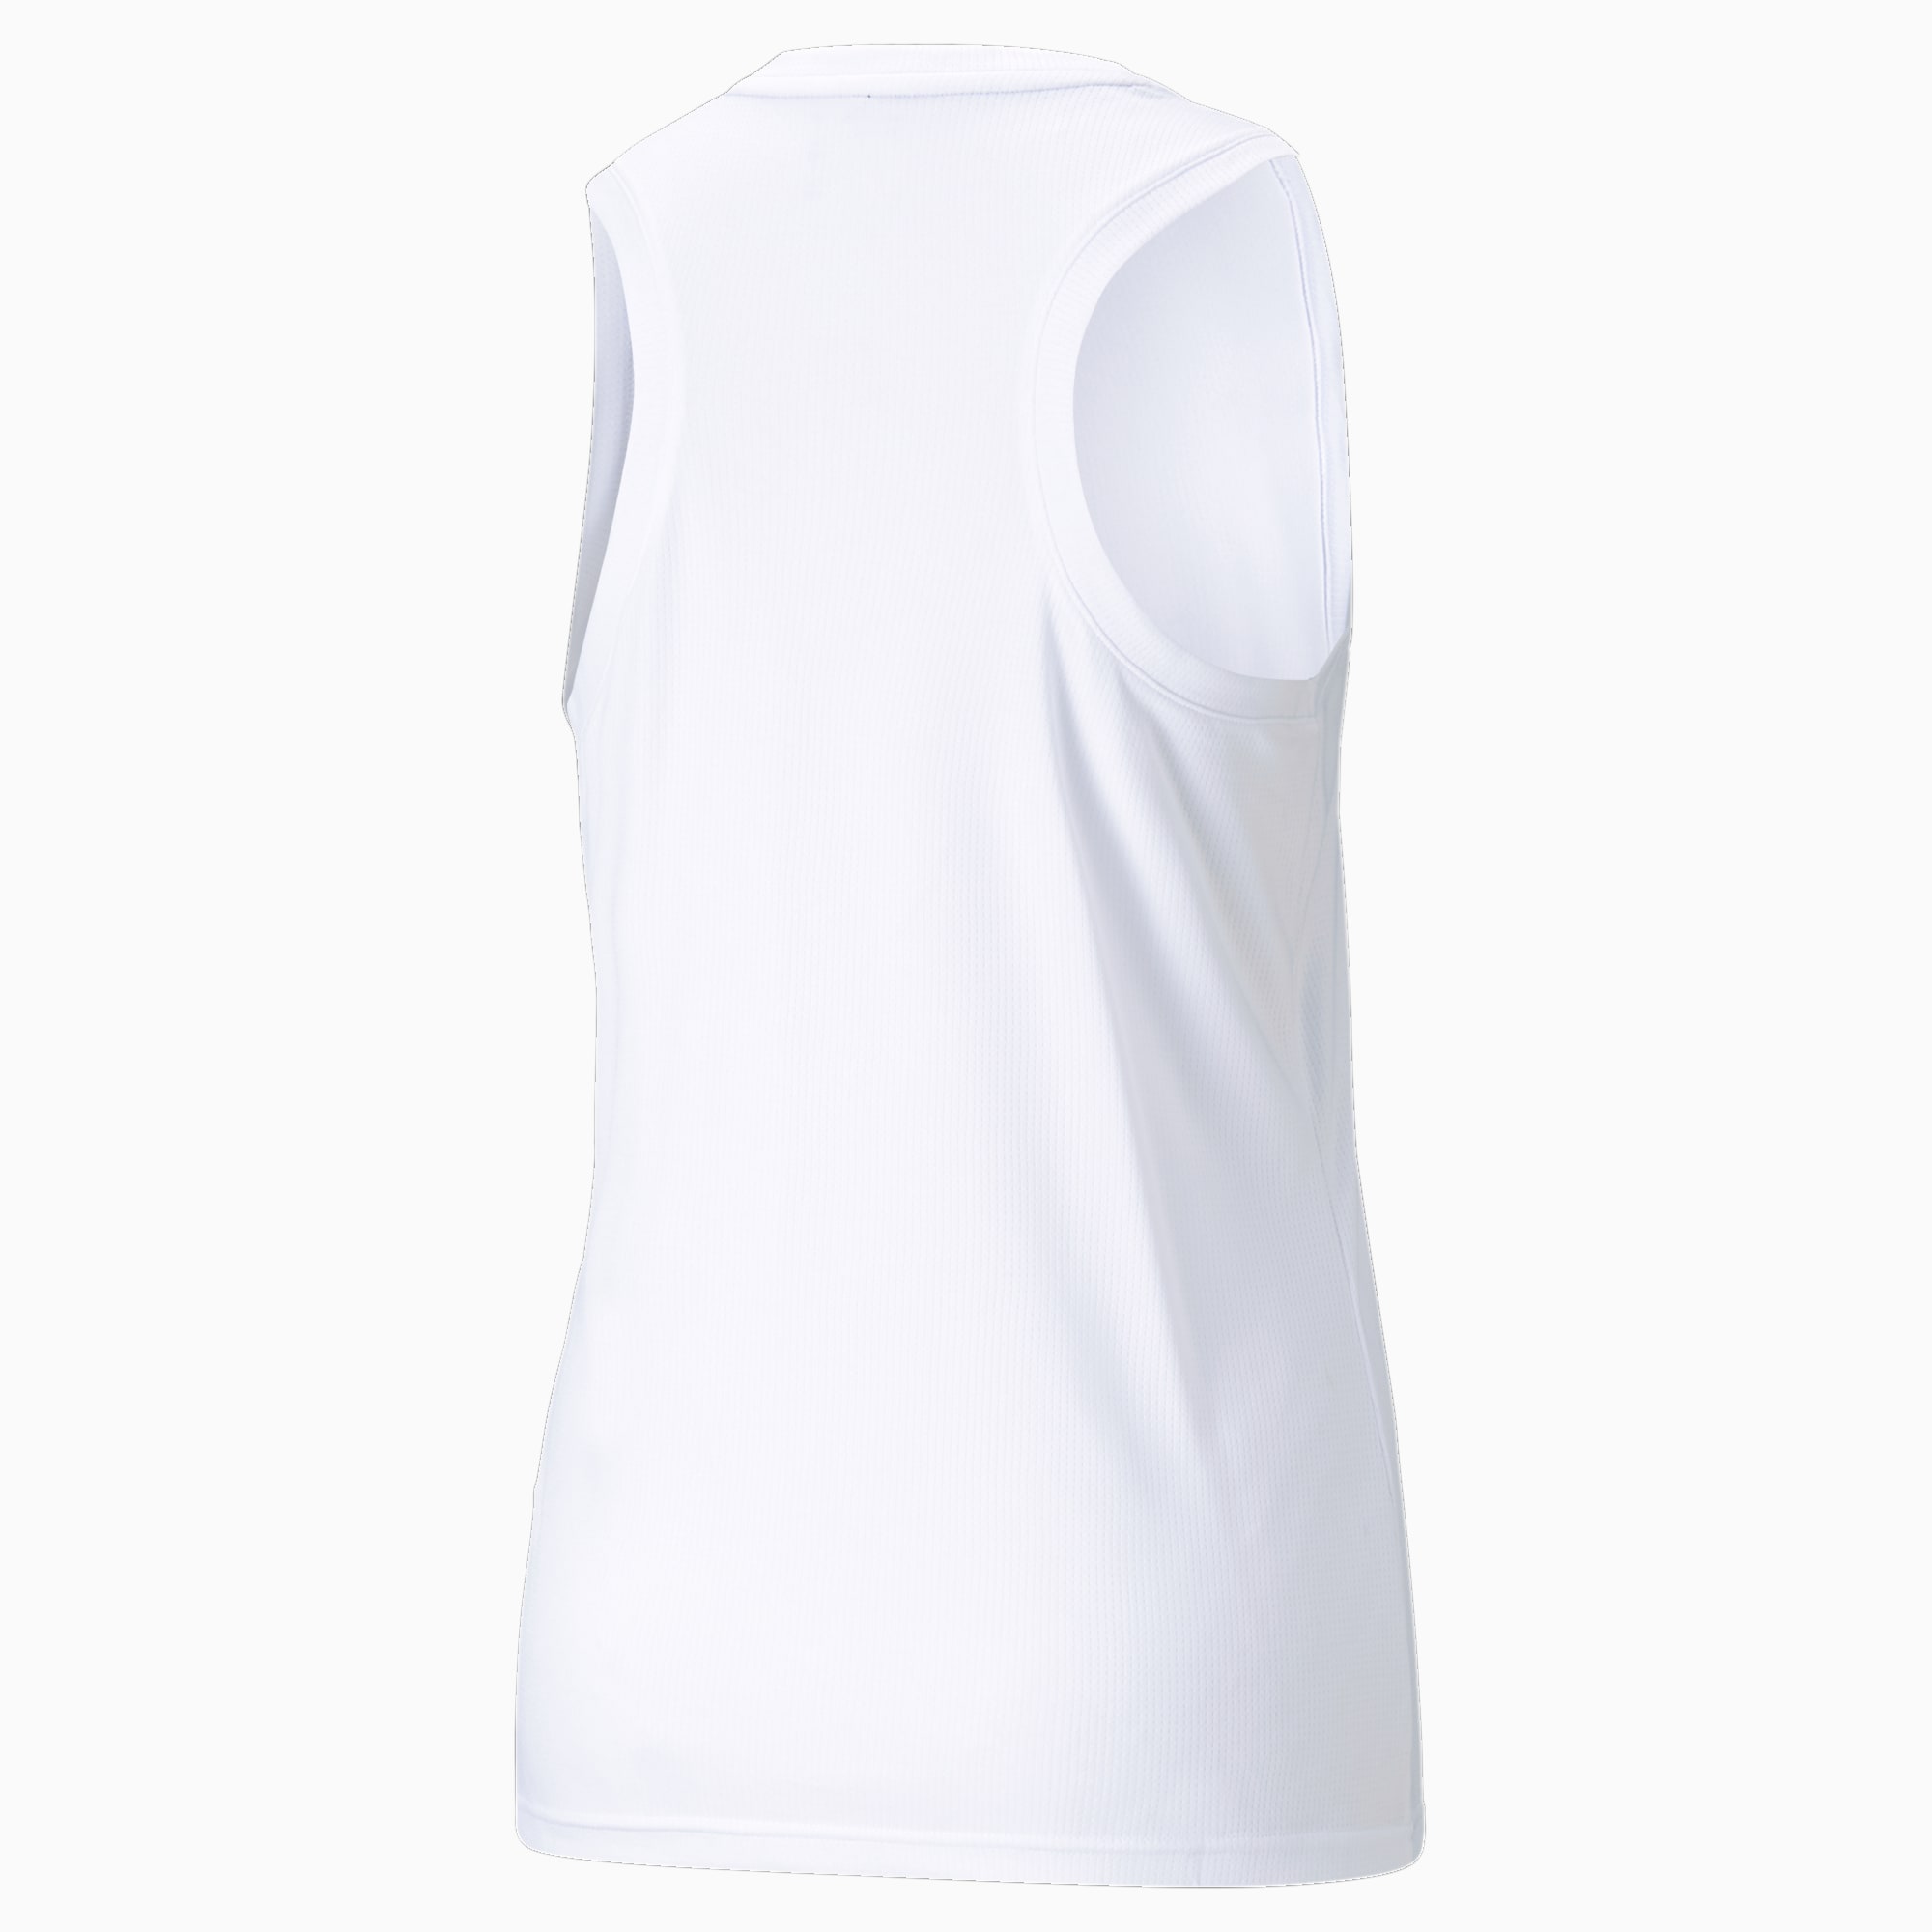 PUMA Performance Women's Training Tank Top Shirt, White, Size M, Clothing